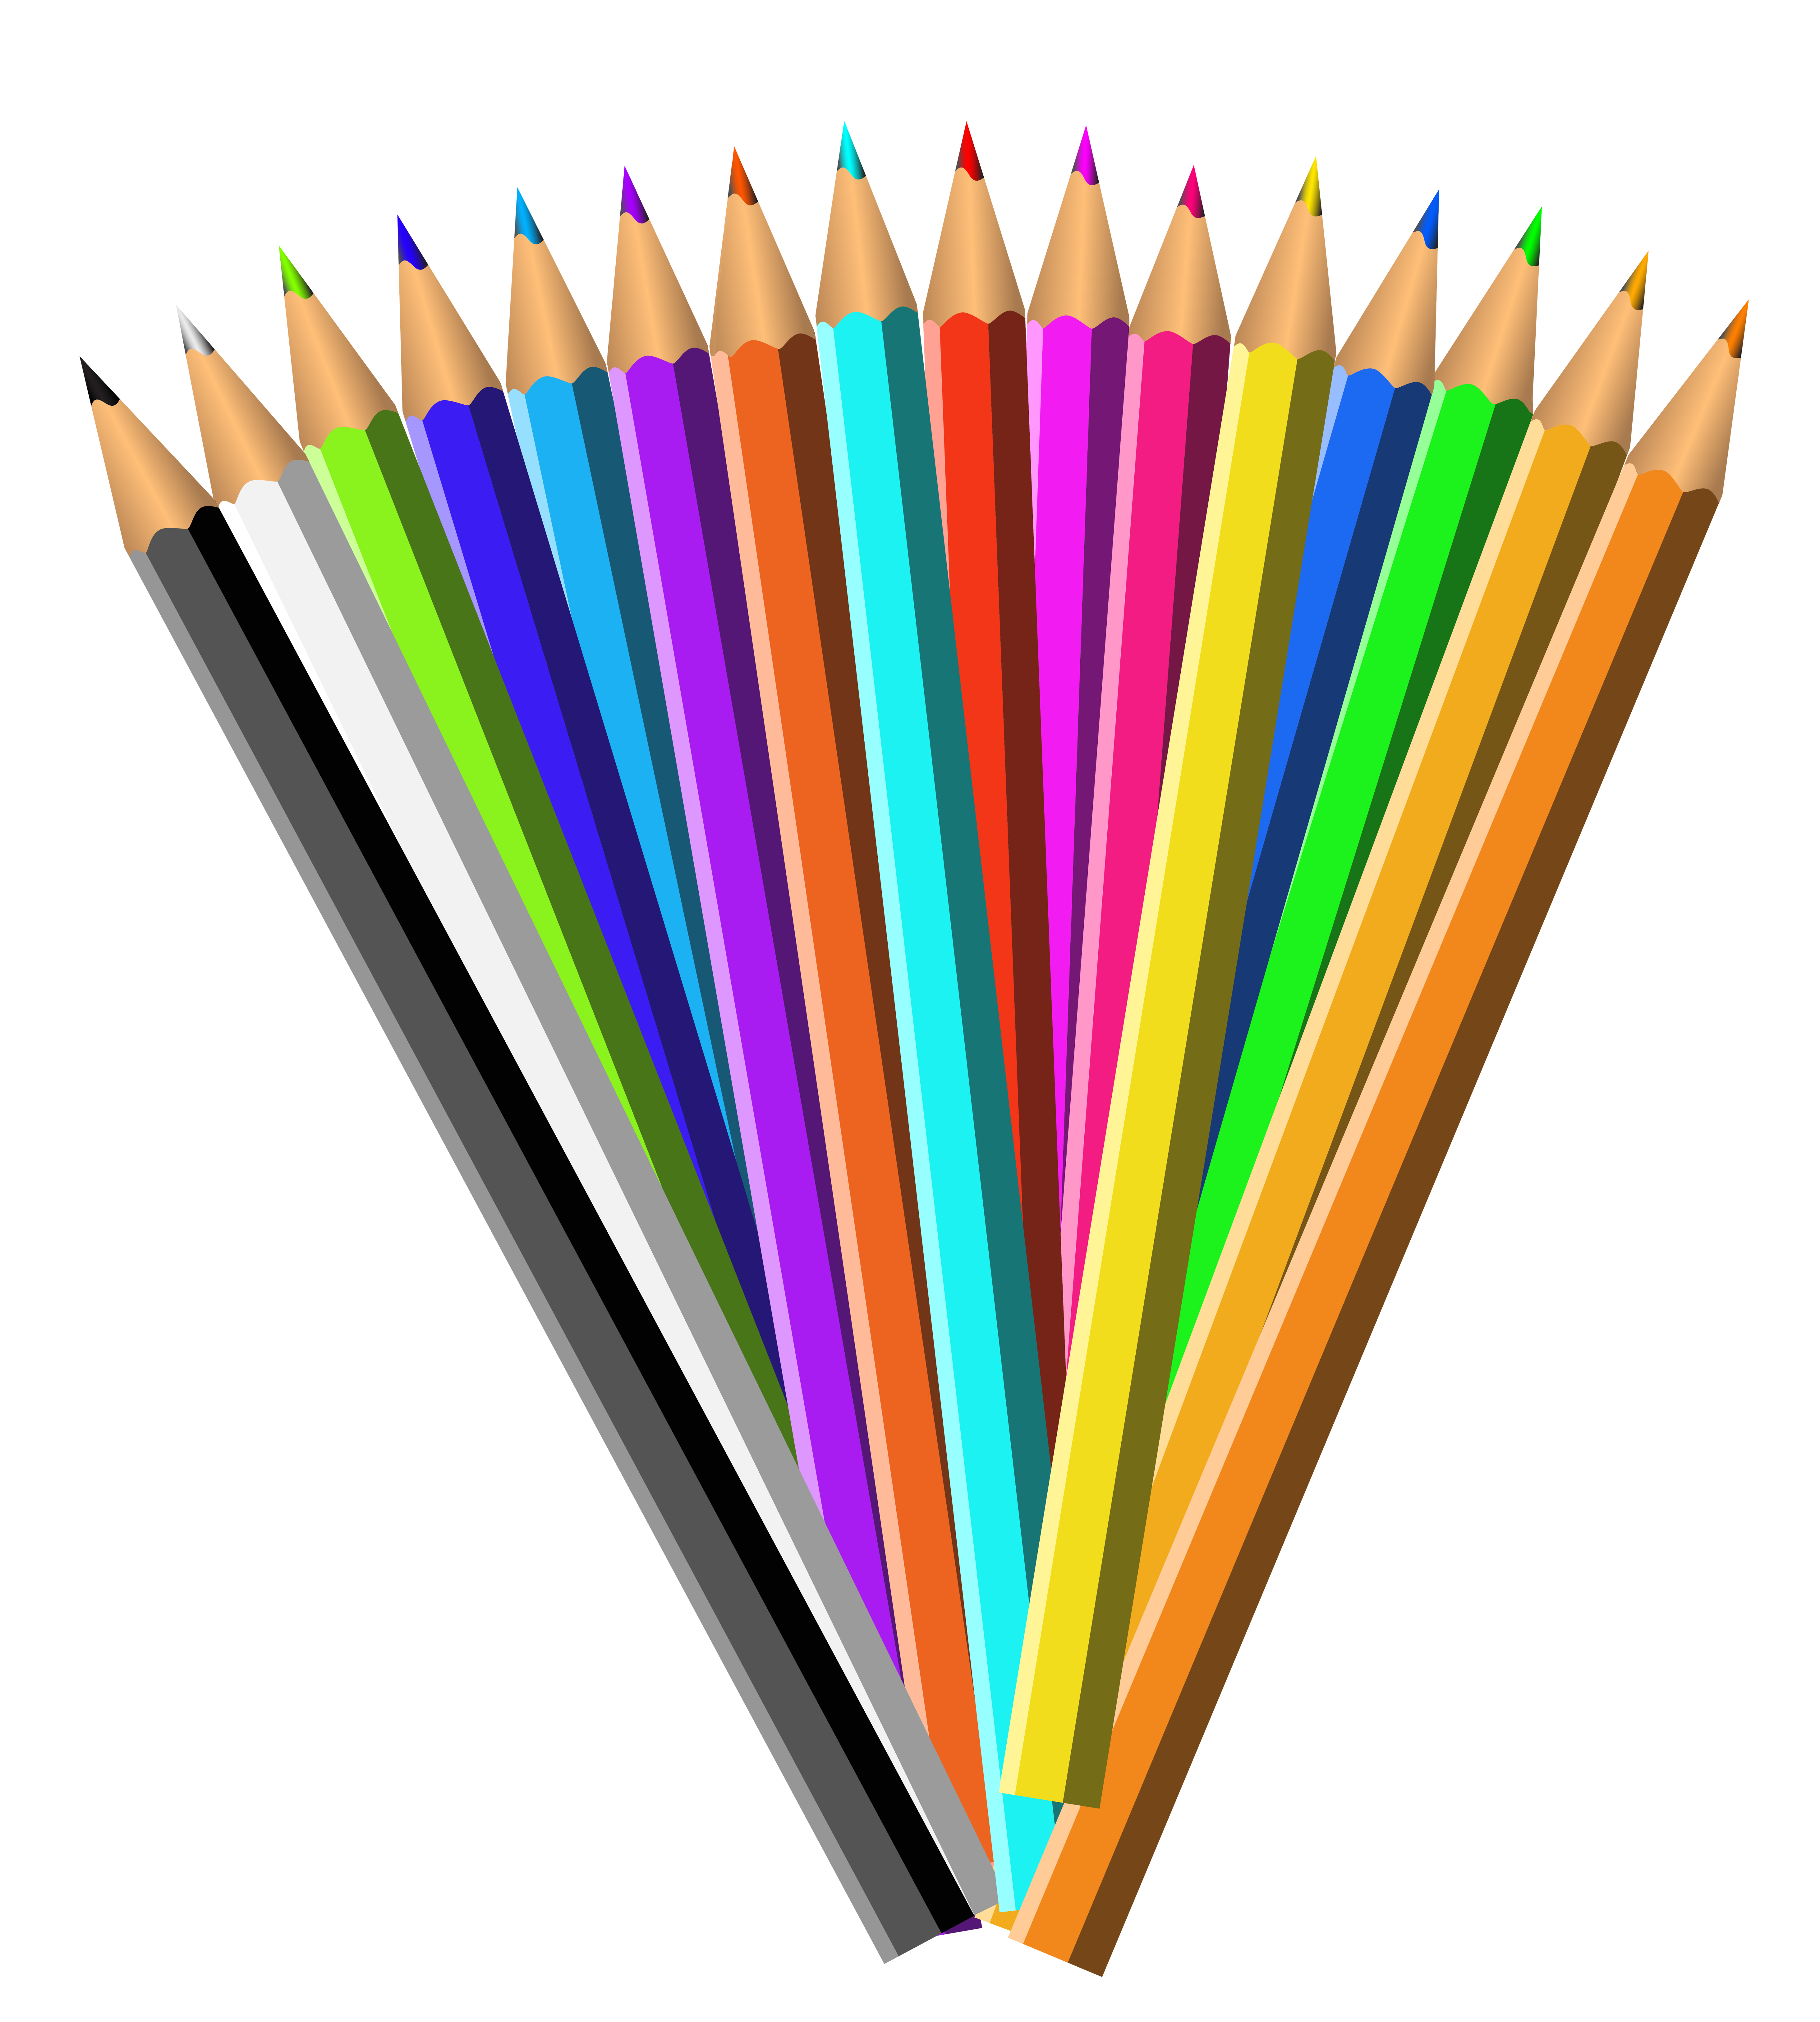 Изображения карандашей. Карандаши цветные. Карандаш мультяшный. Карандаши мультяшные. Цветные карандаши мультяшные.